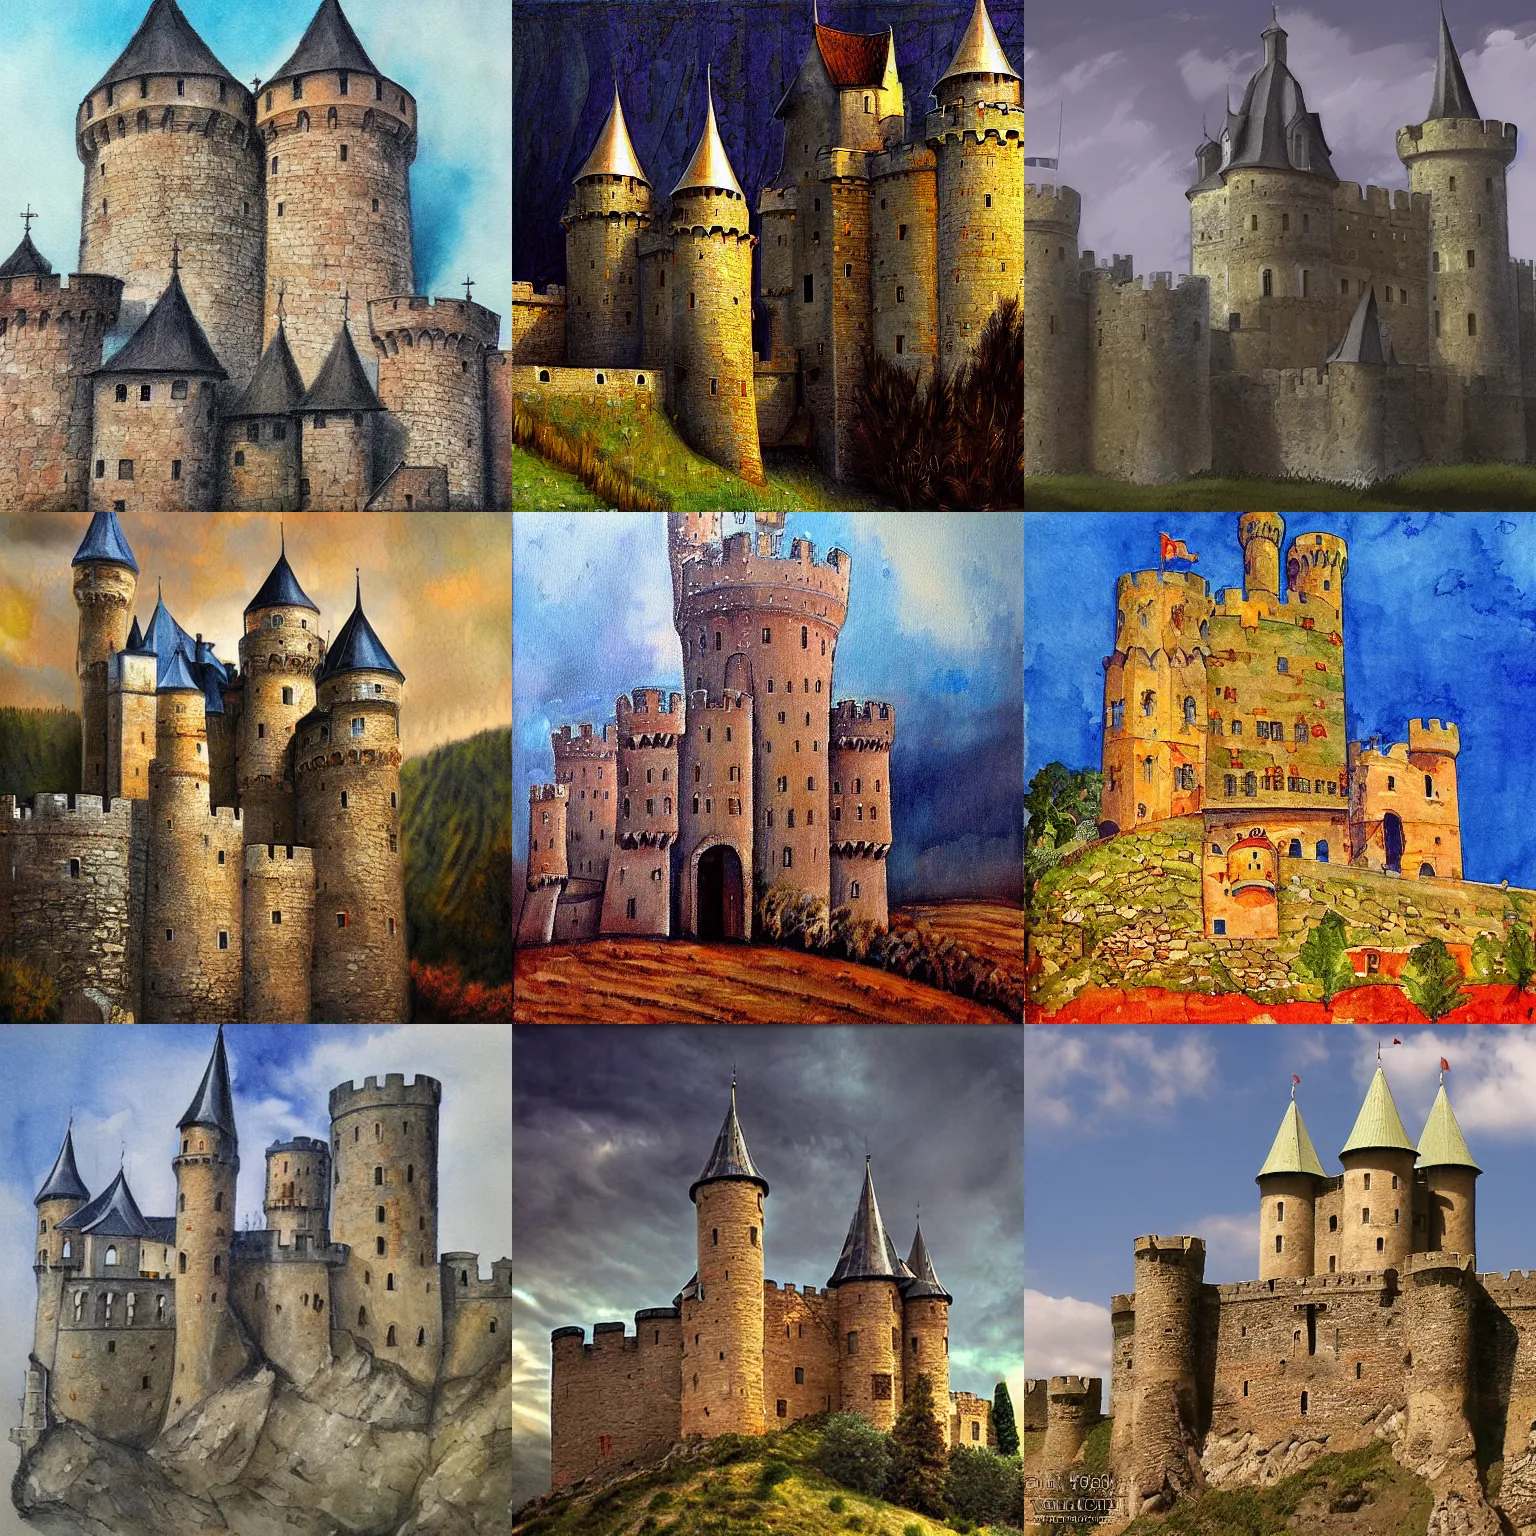 Prompt: medieval castle, by yelena polenova